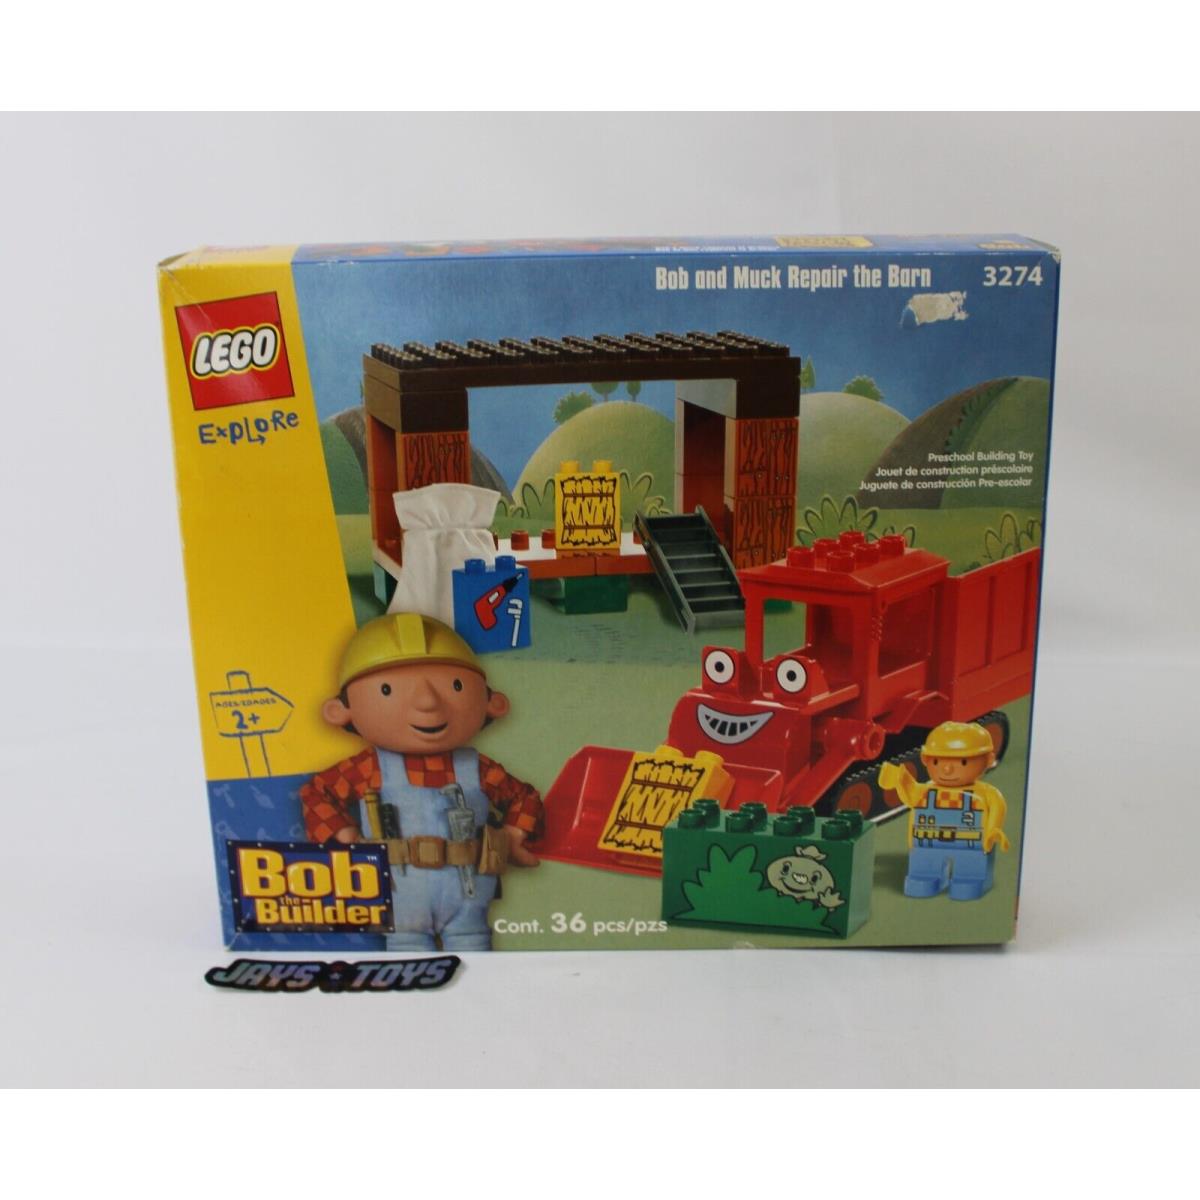 Lego Explore 3274 Bob The Builder Bob and Muck Repair The Barn 36 Pcs